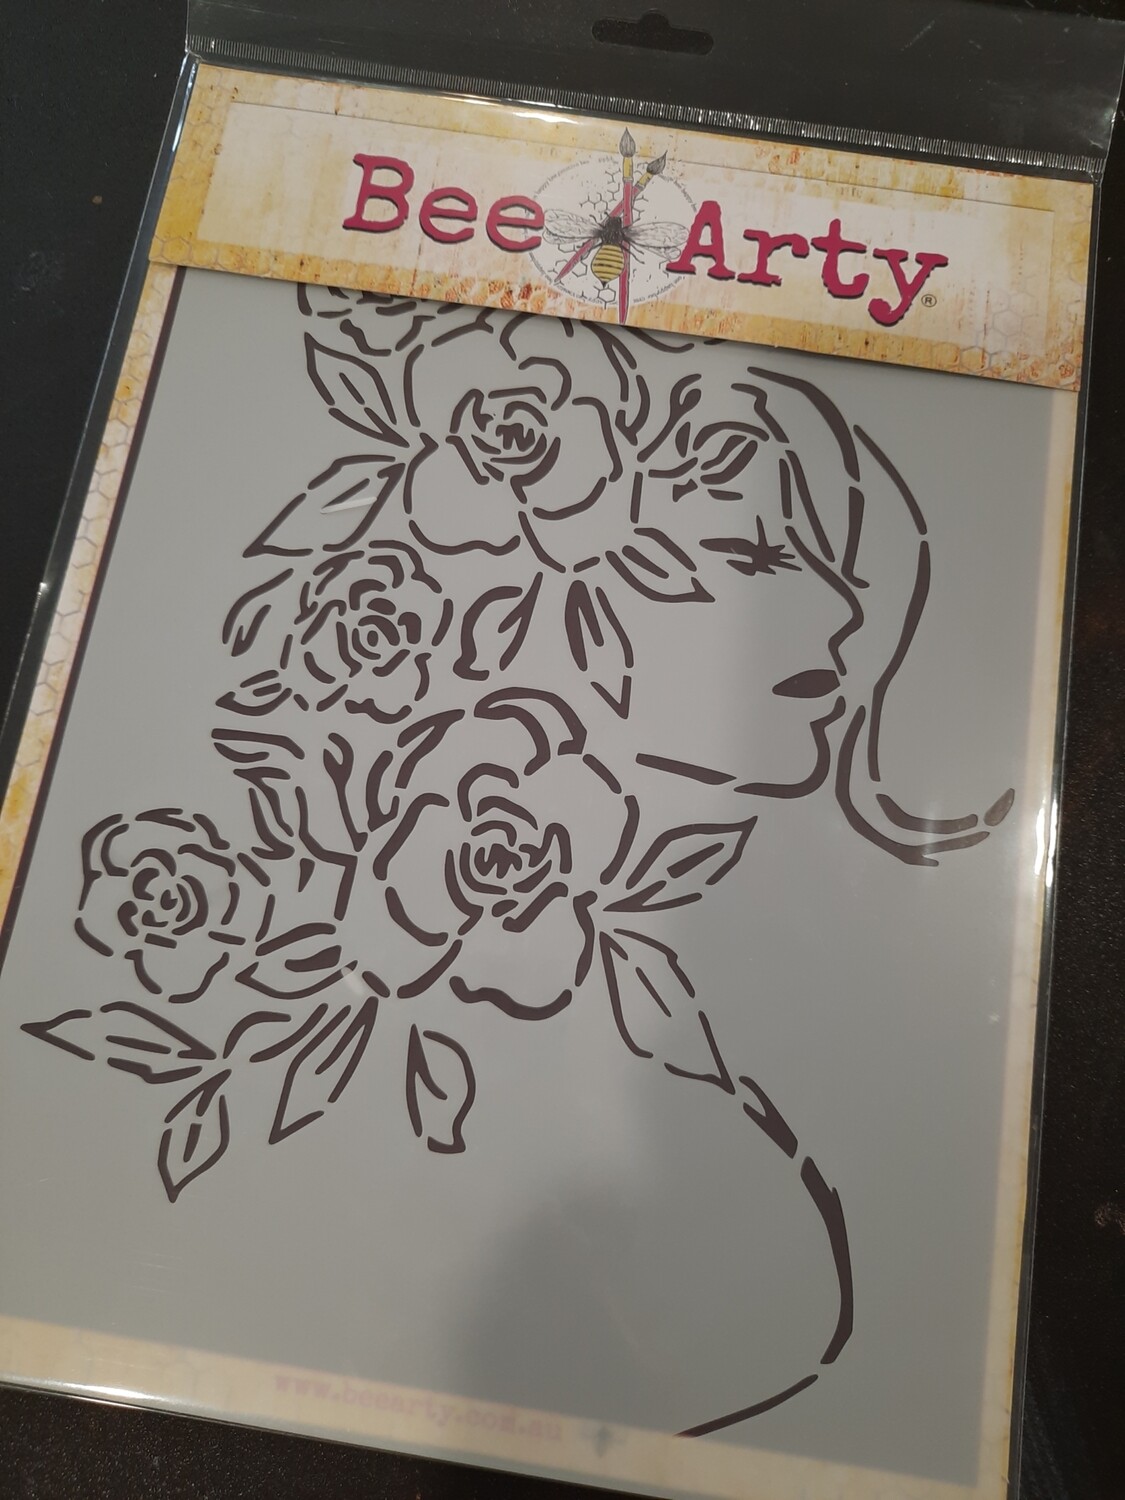 Bee Arty My lady stencil